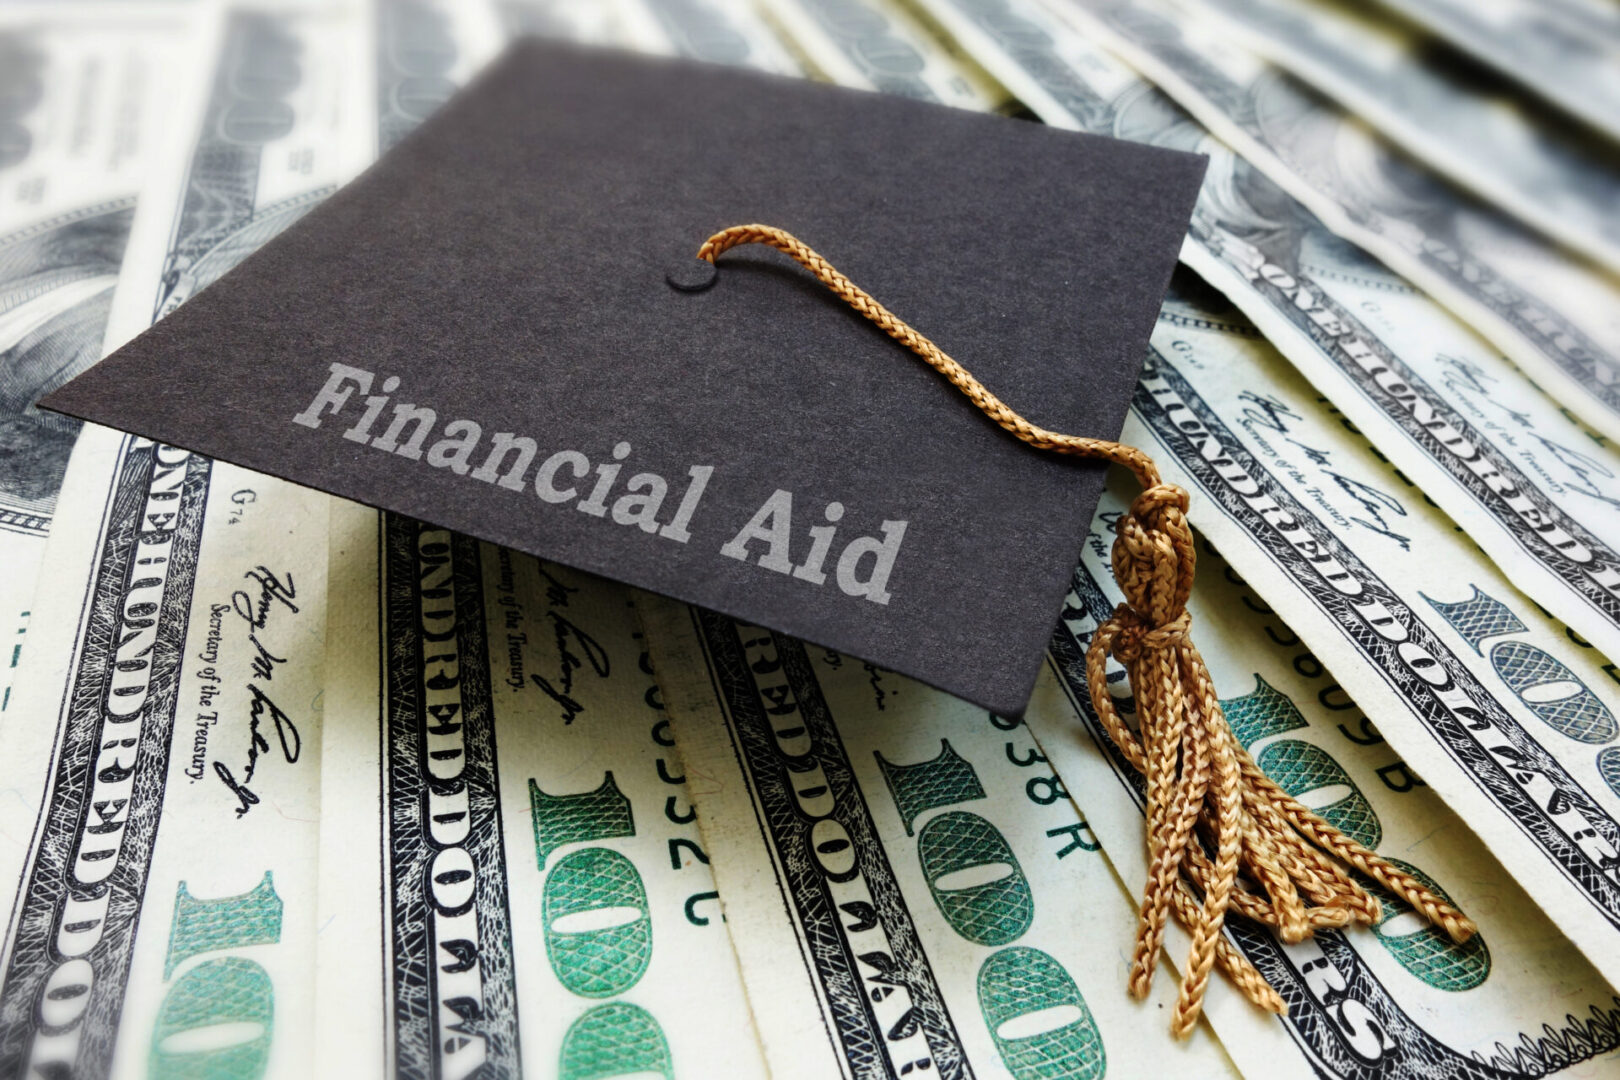 Mini Financial Aid graduation mortar board cap on money